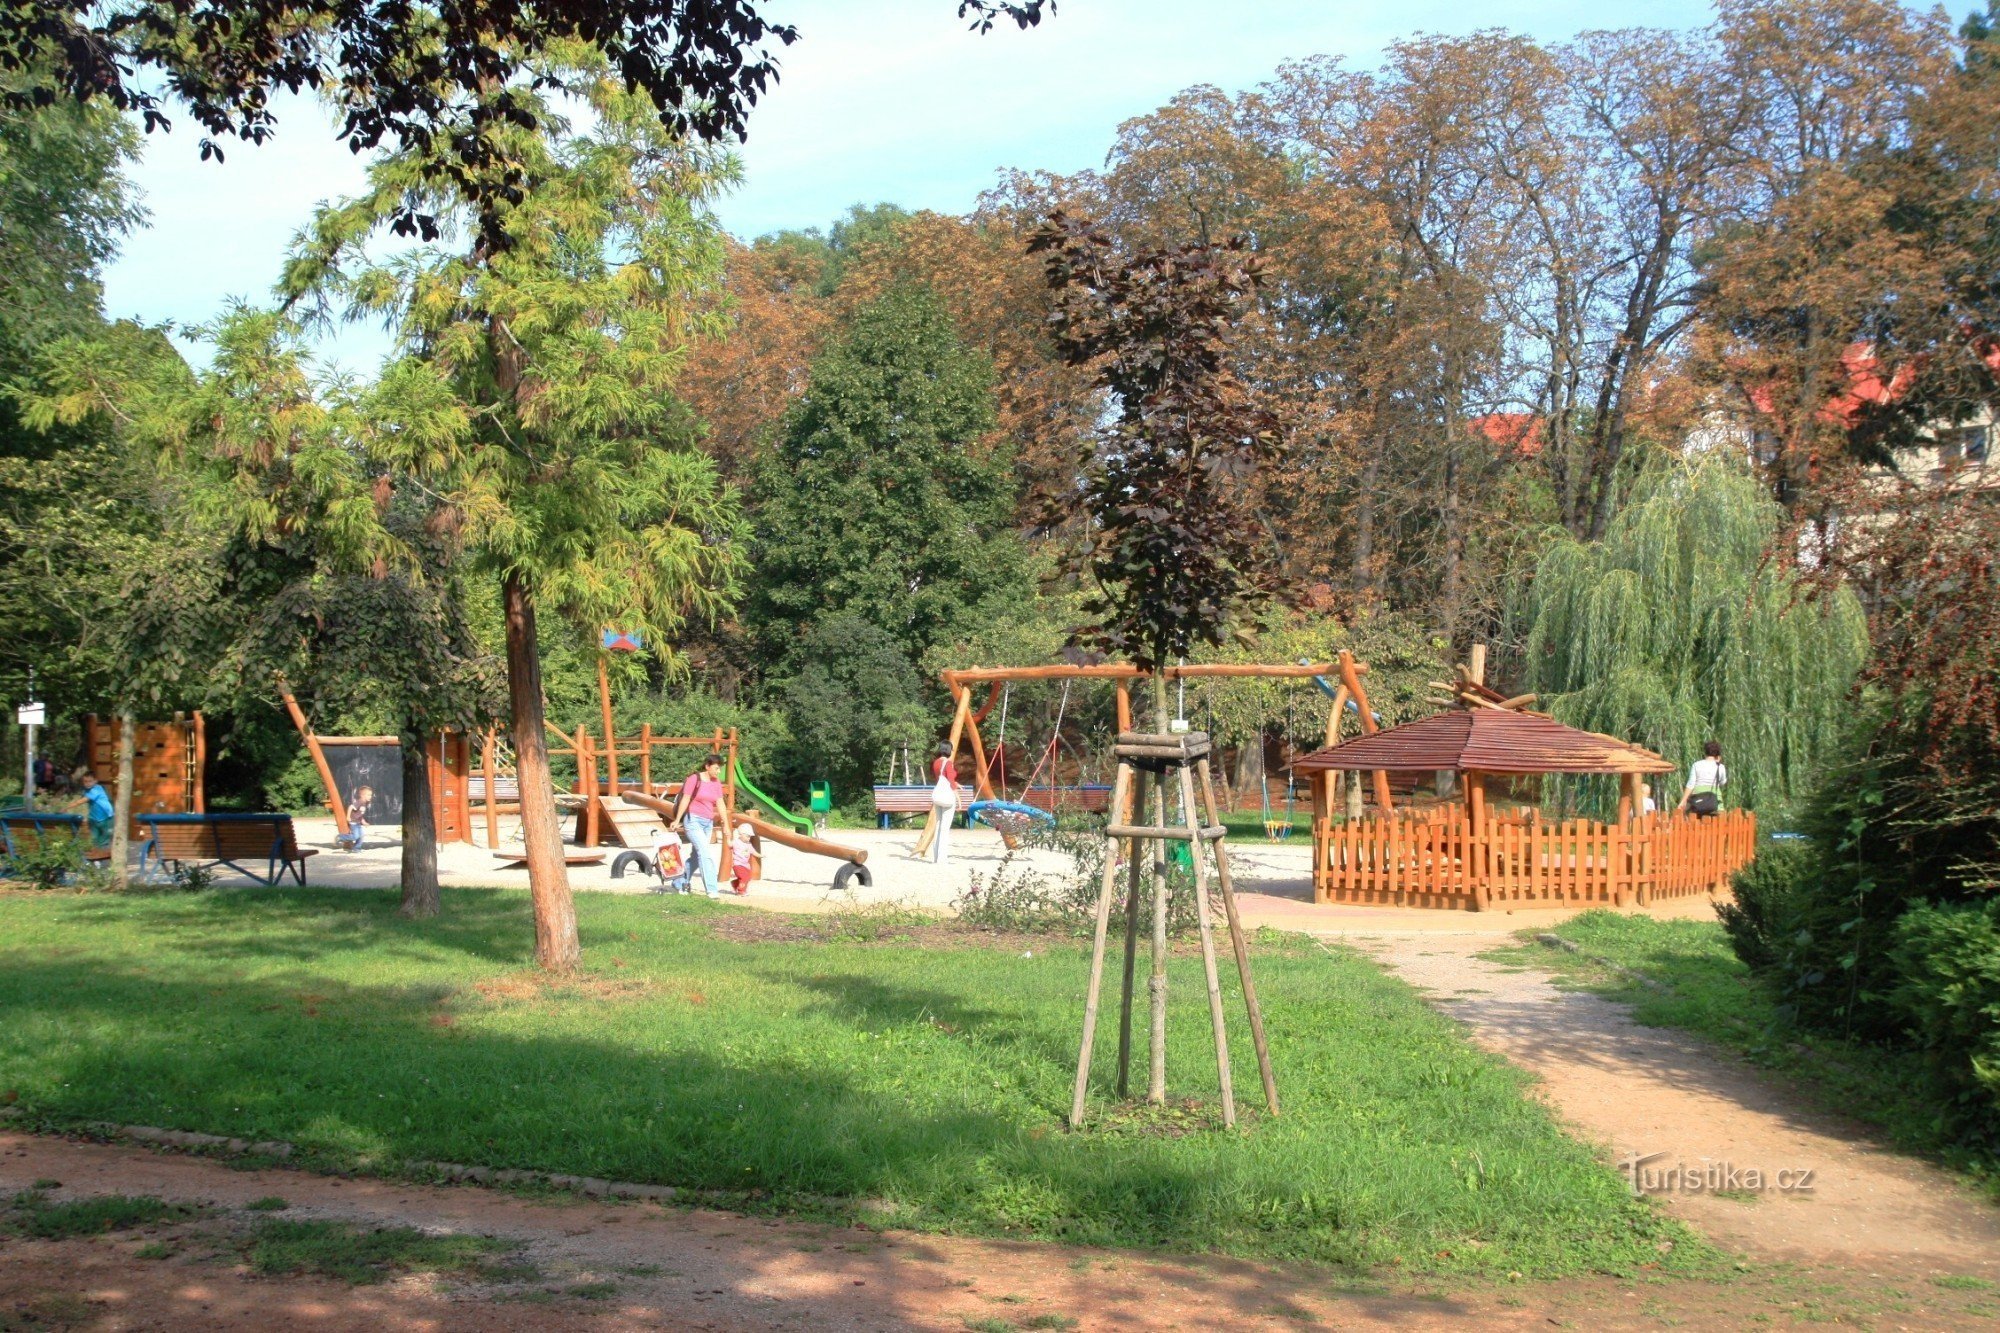 Parque infantil en el parque